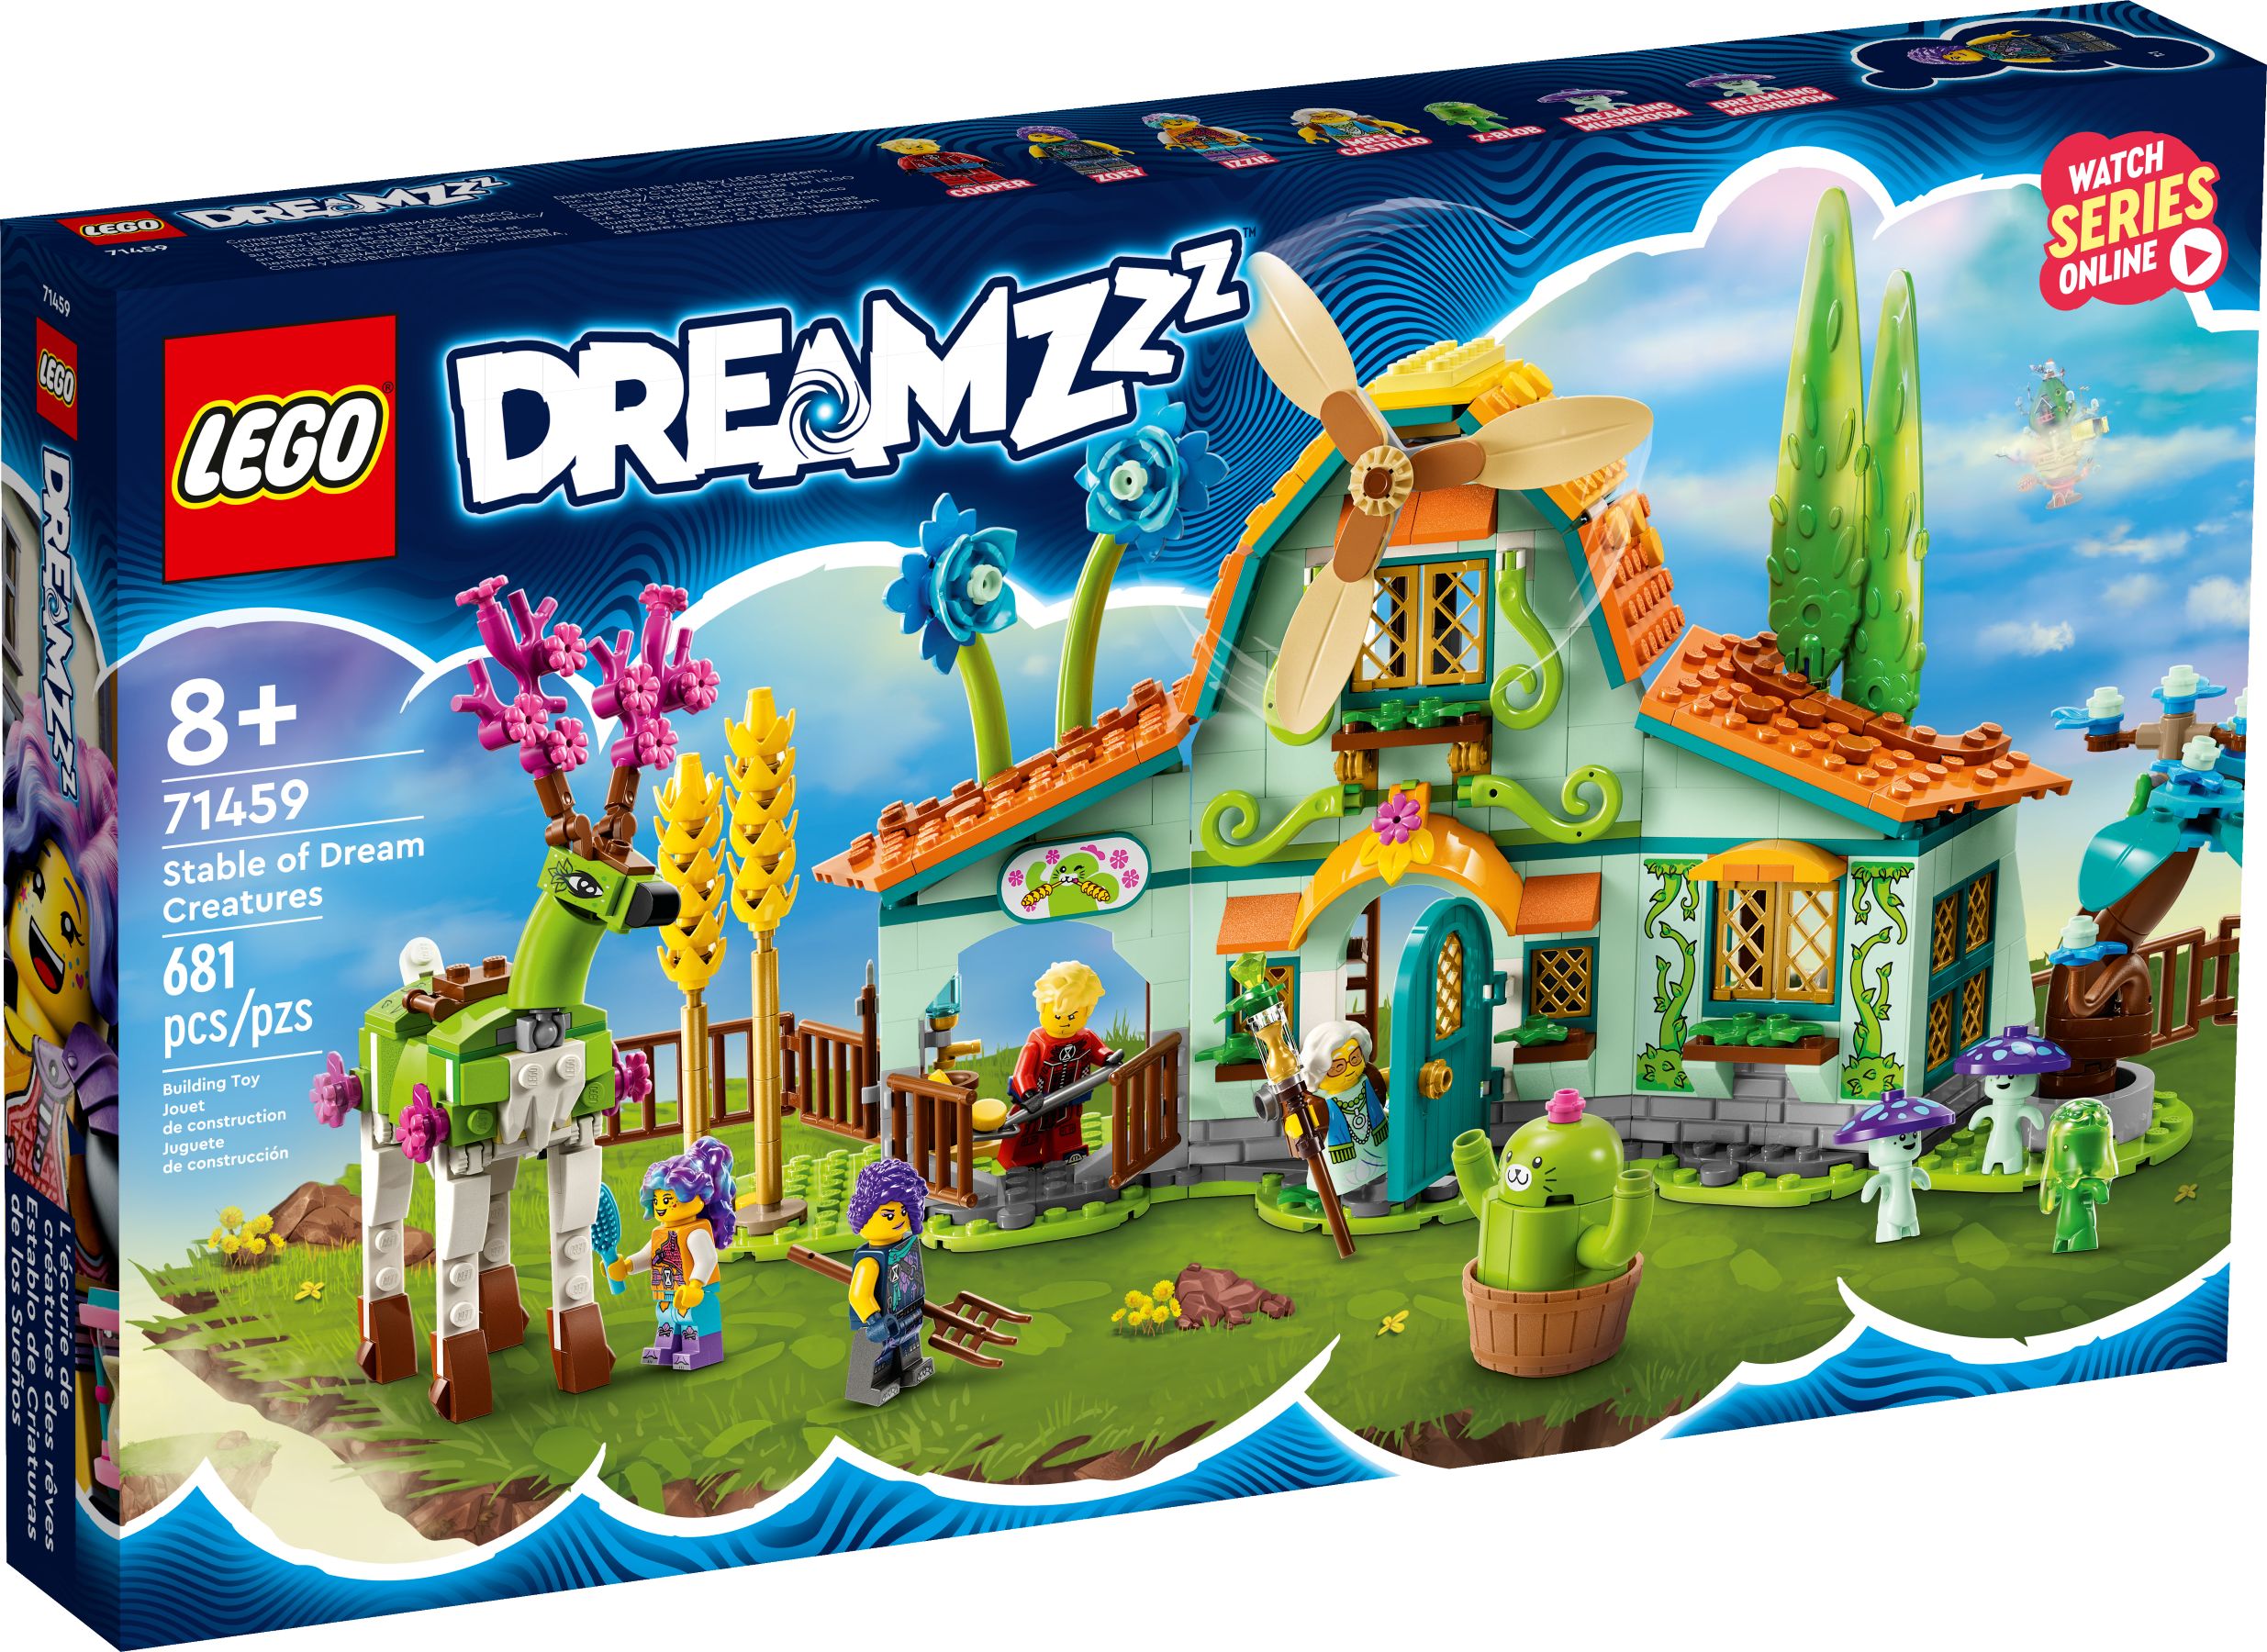 LEGO Dreamzzz 71459 Stall der Traumwesen LEGO_71459_alt1.jpg